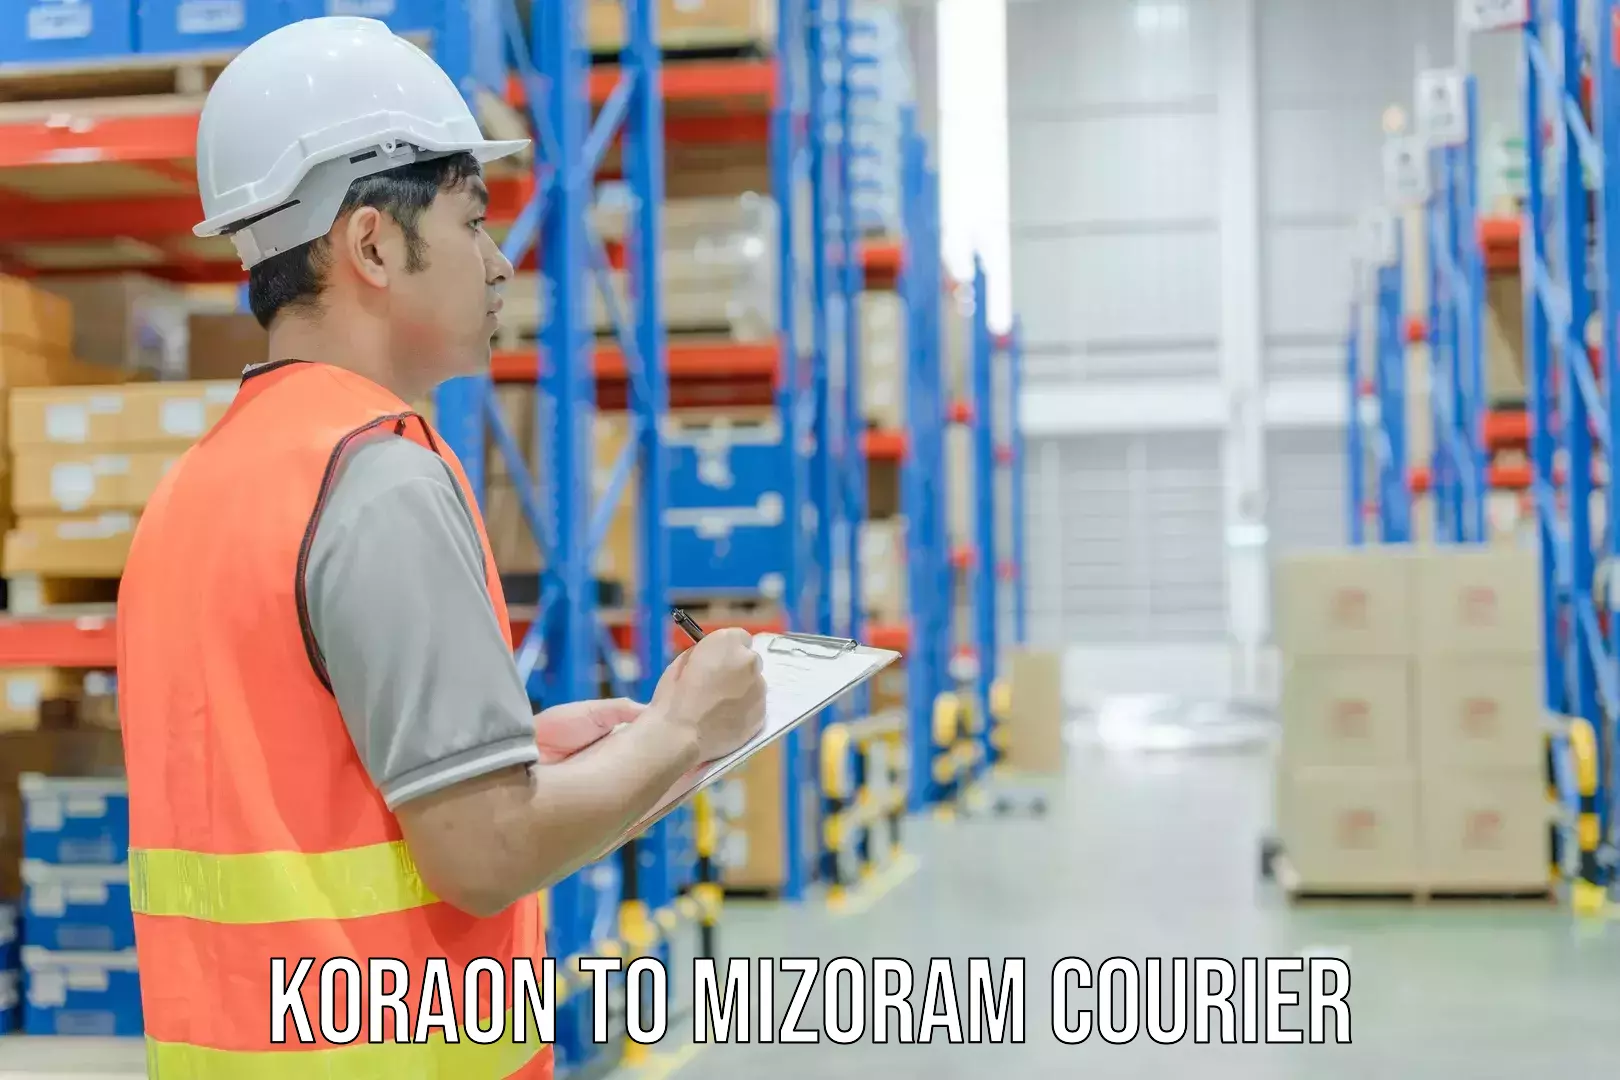 Professional courier handling Koraon to Aizawl